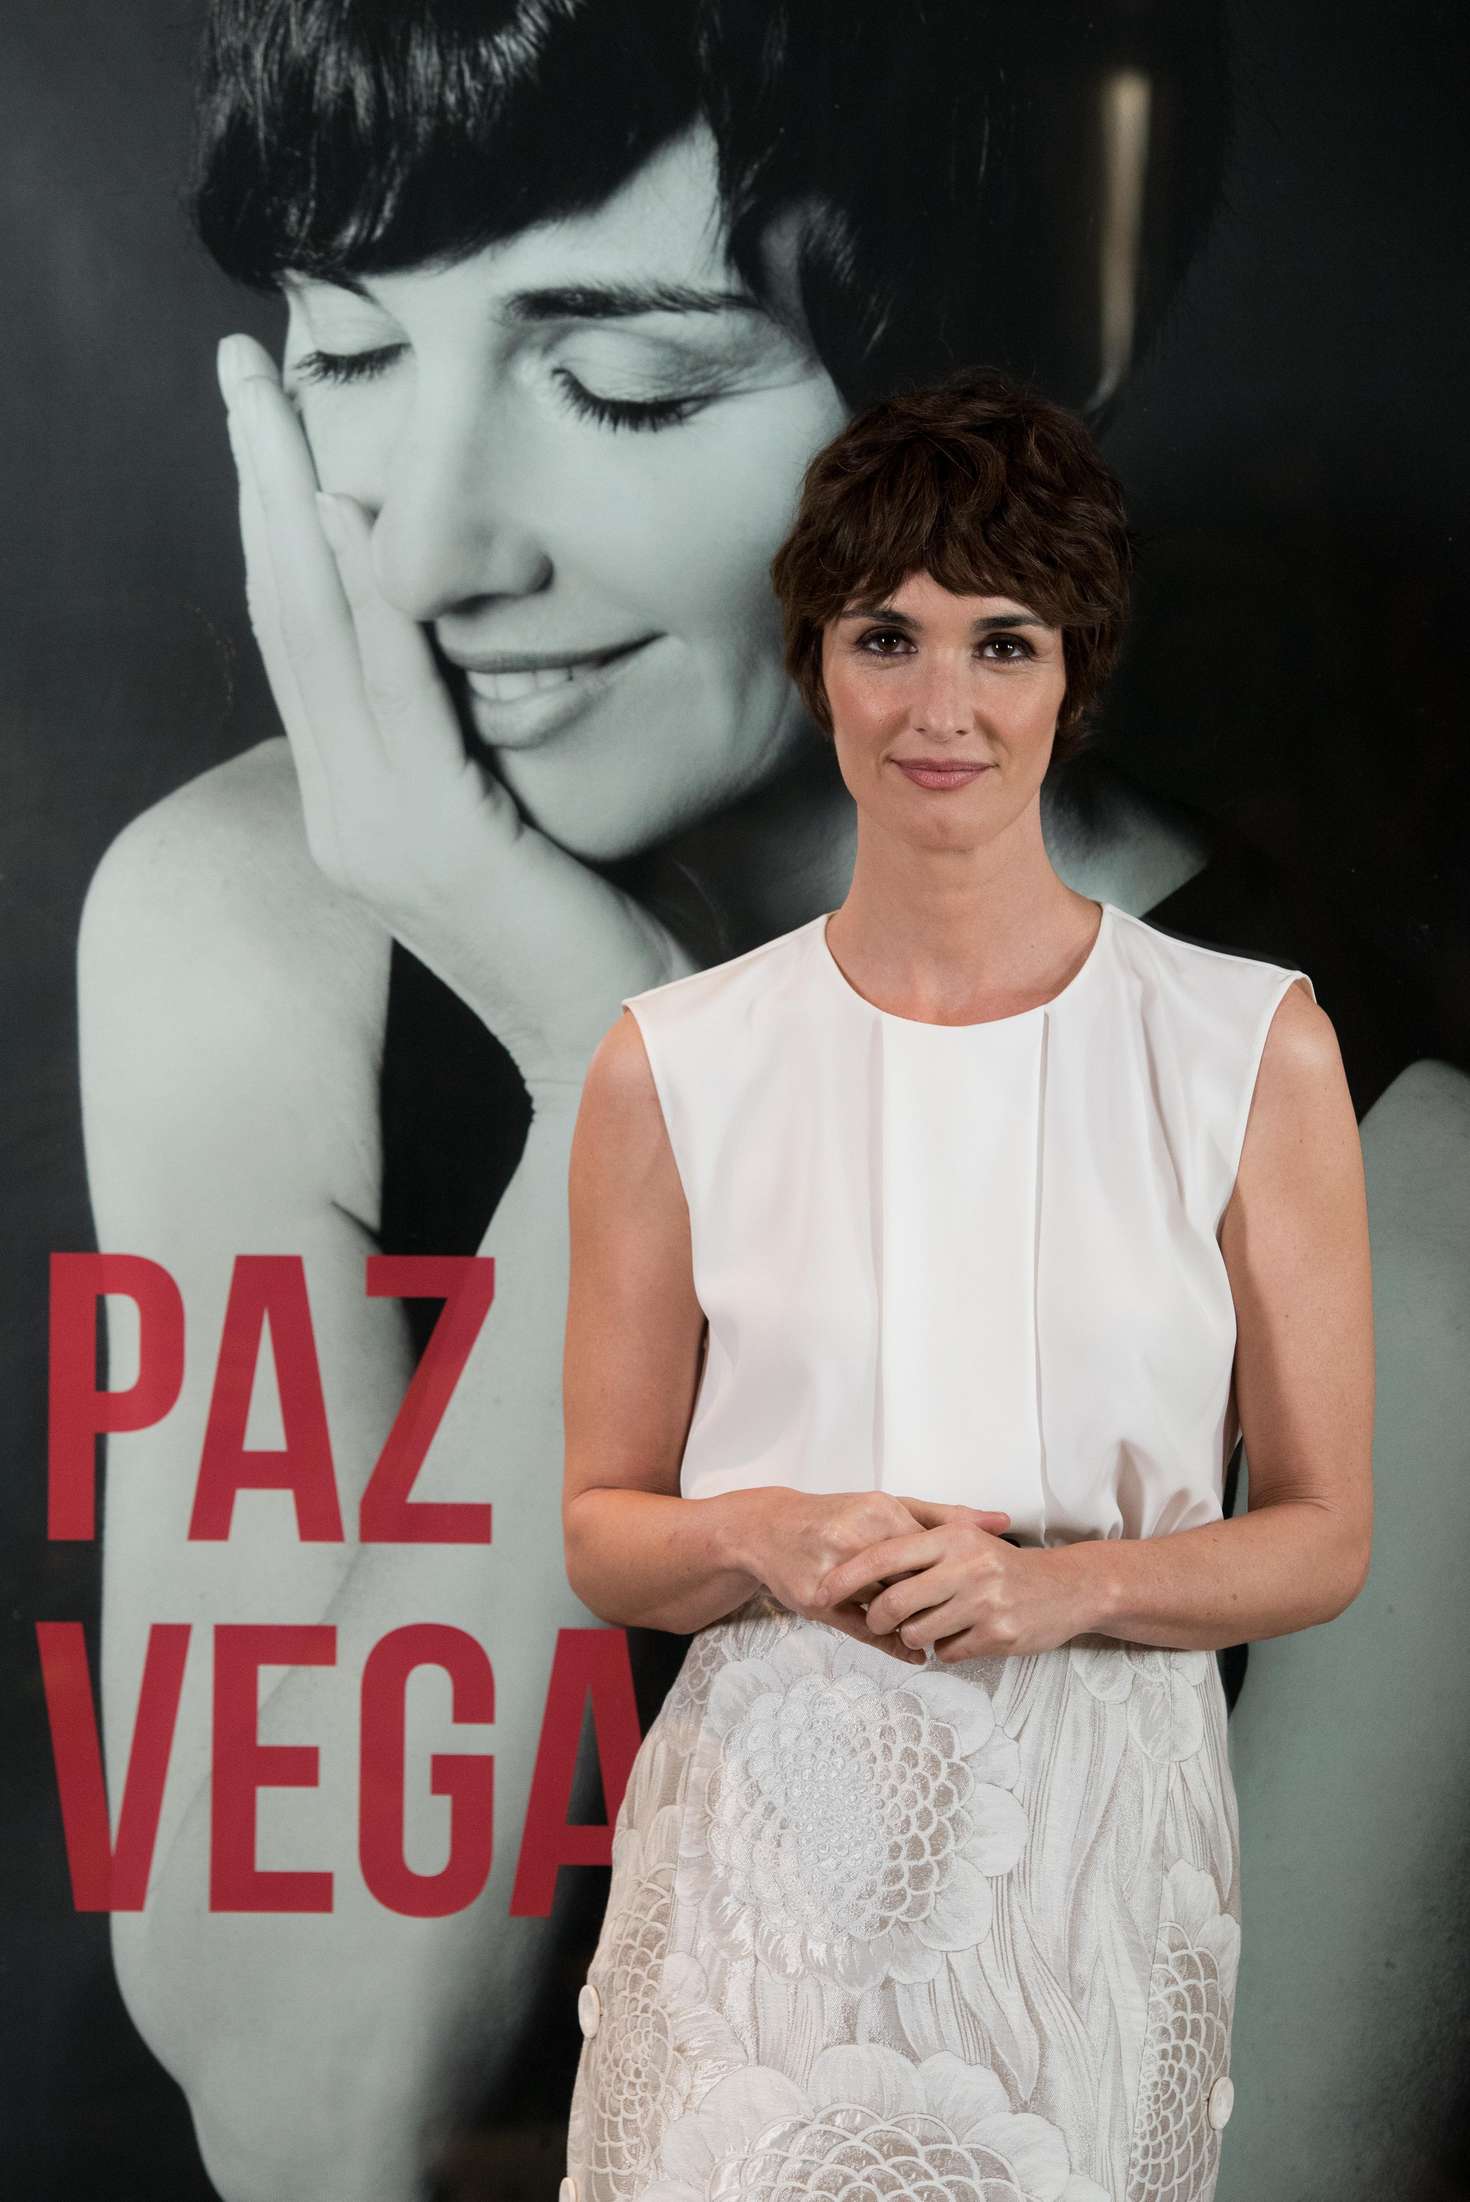 Paz Vega Malaga Sur Award at Malaga Film Festival in Spain